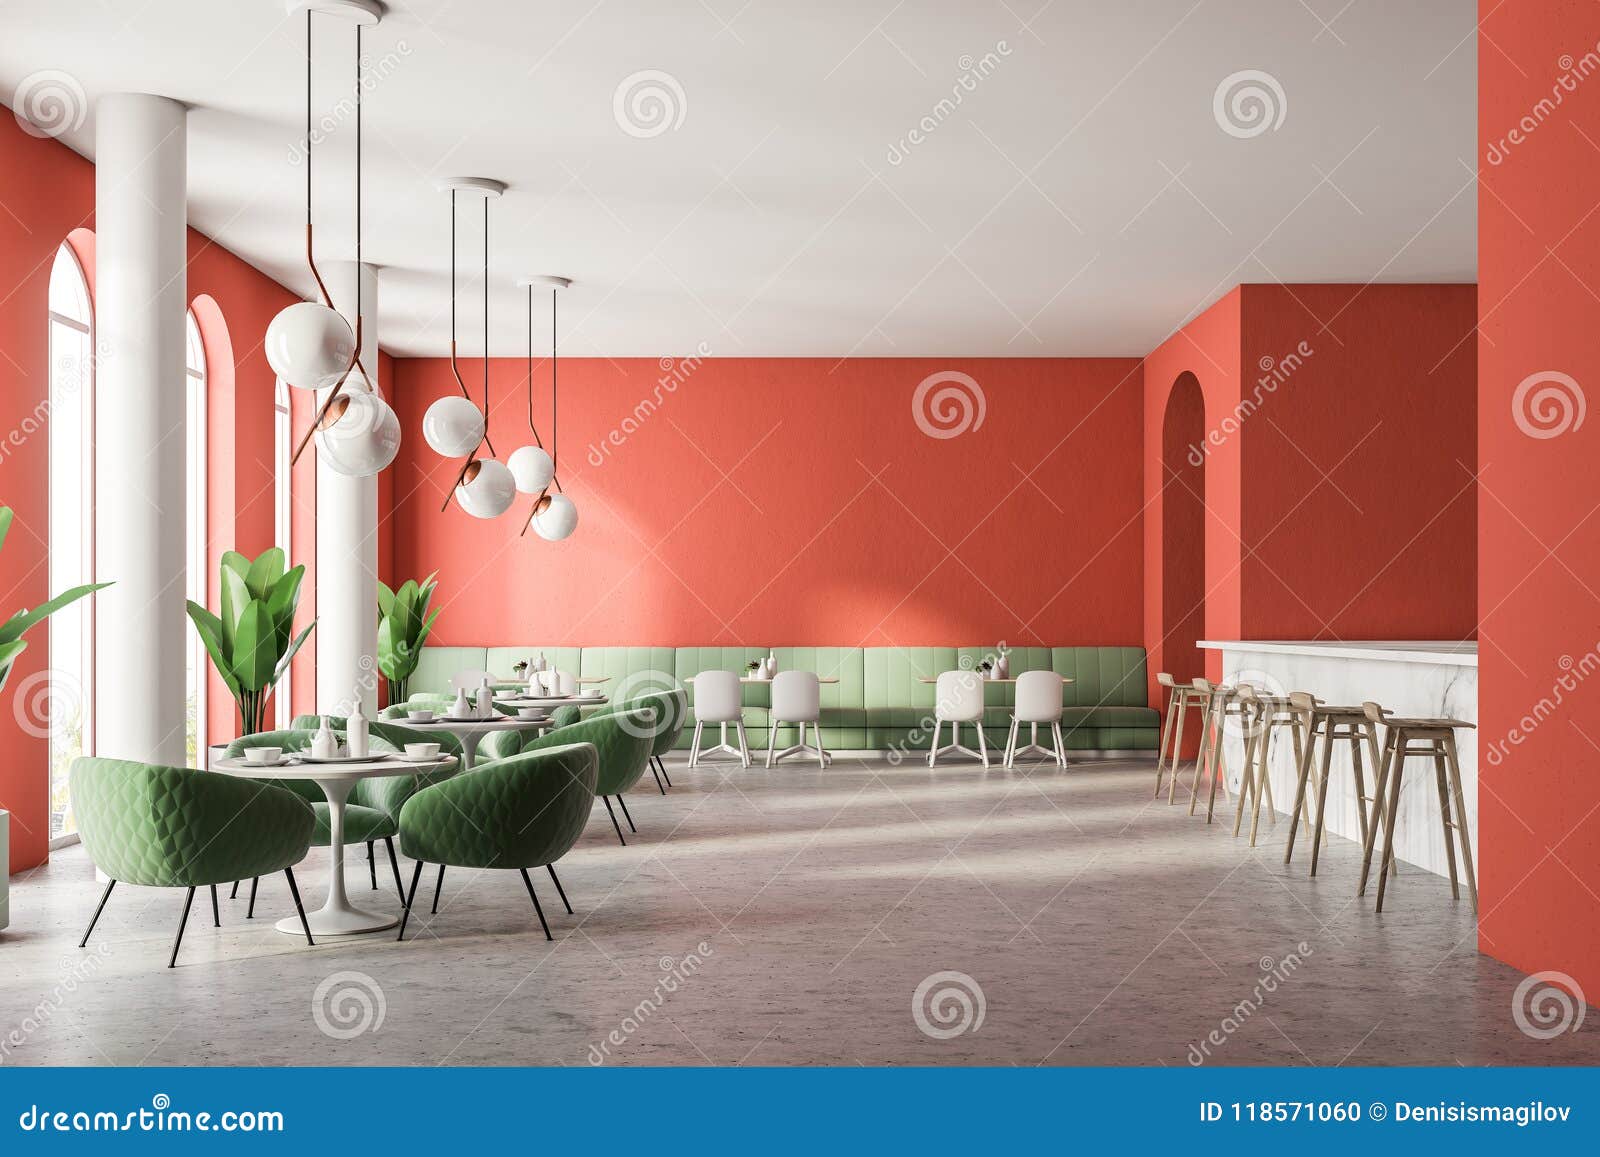 Green Sofa Luxury Restaurant Interior Stock Illustration